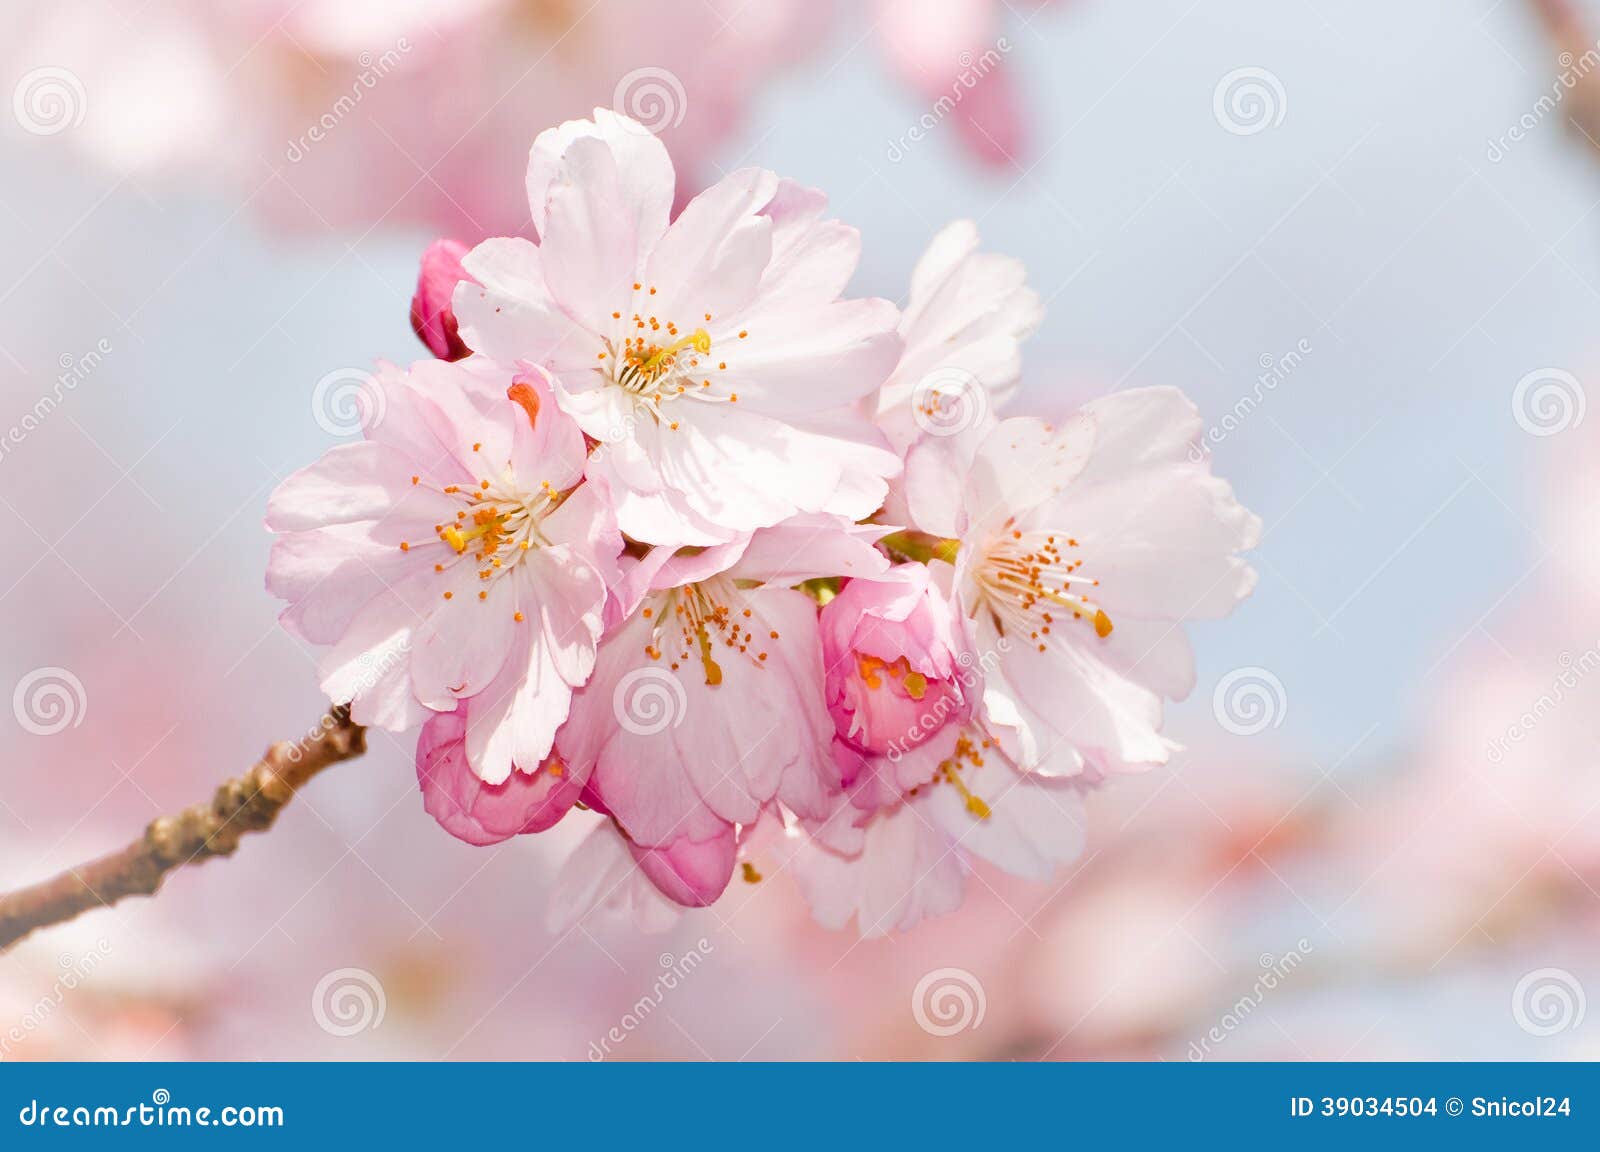 pink cherry flower blossom